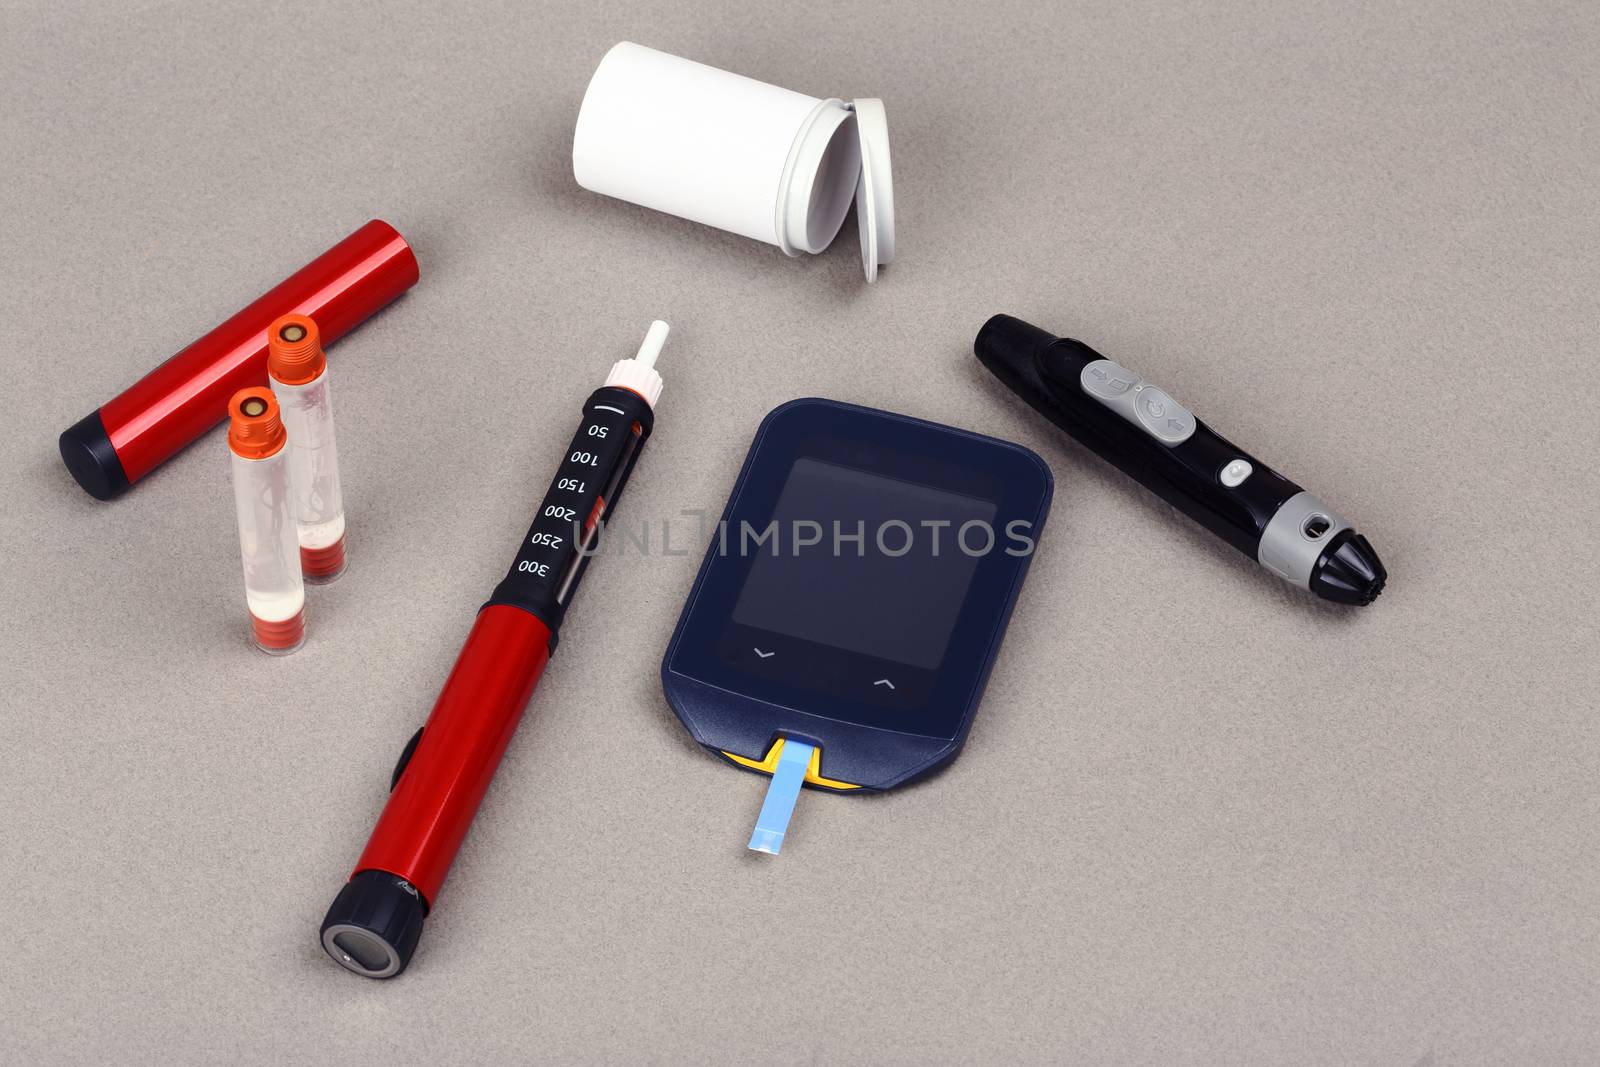 Diabetes equipment, Insulin pen and glucose level blood test